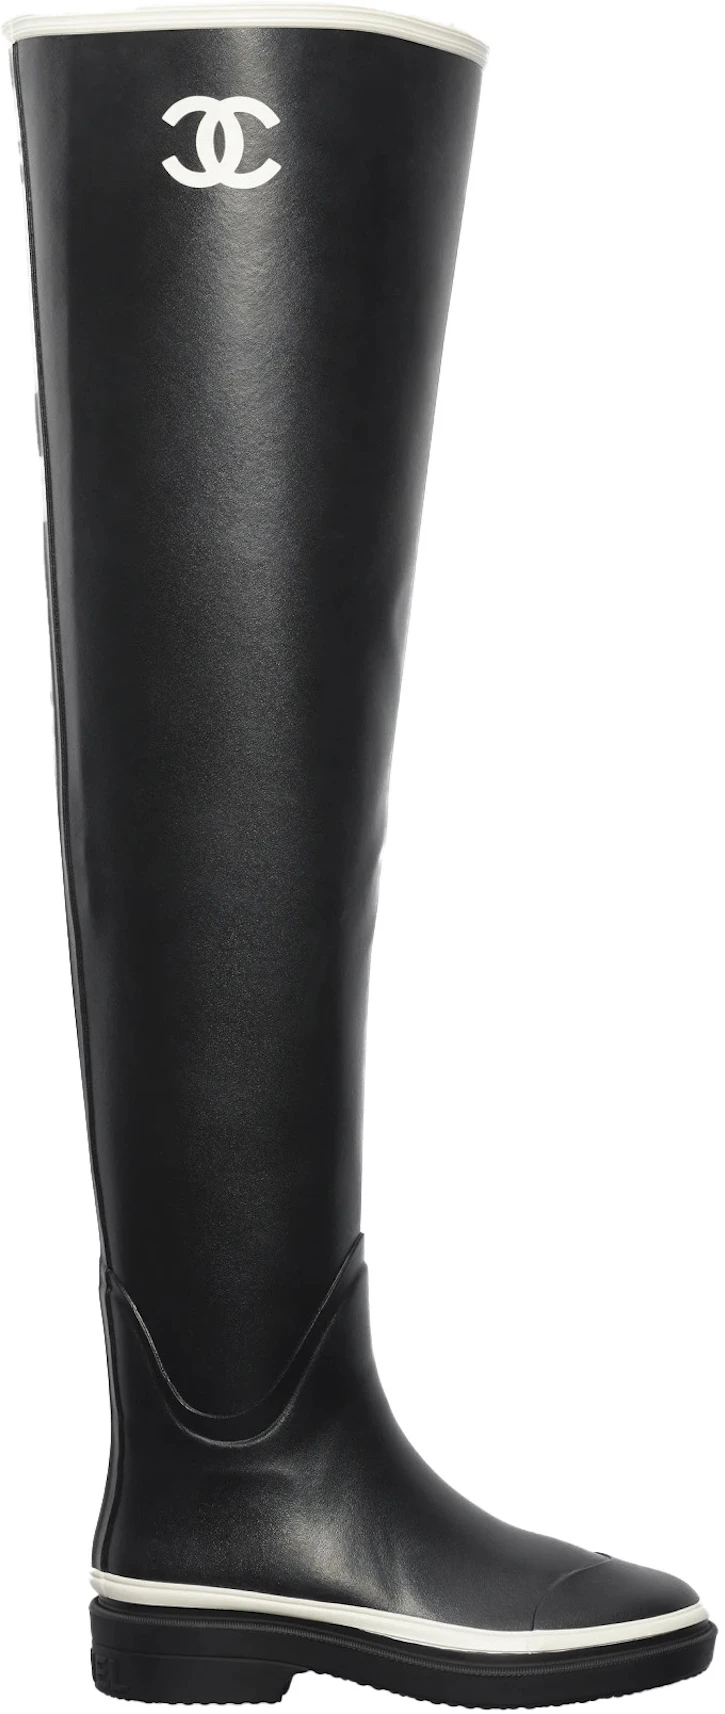 Chanel Thigh High Rubber Rain Boots Black - G39625 X56326 K5255 - US